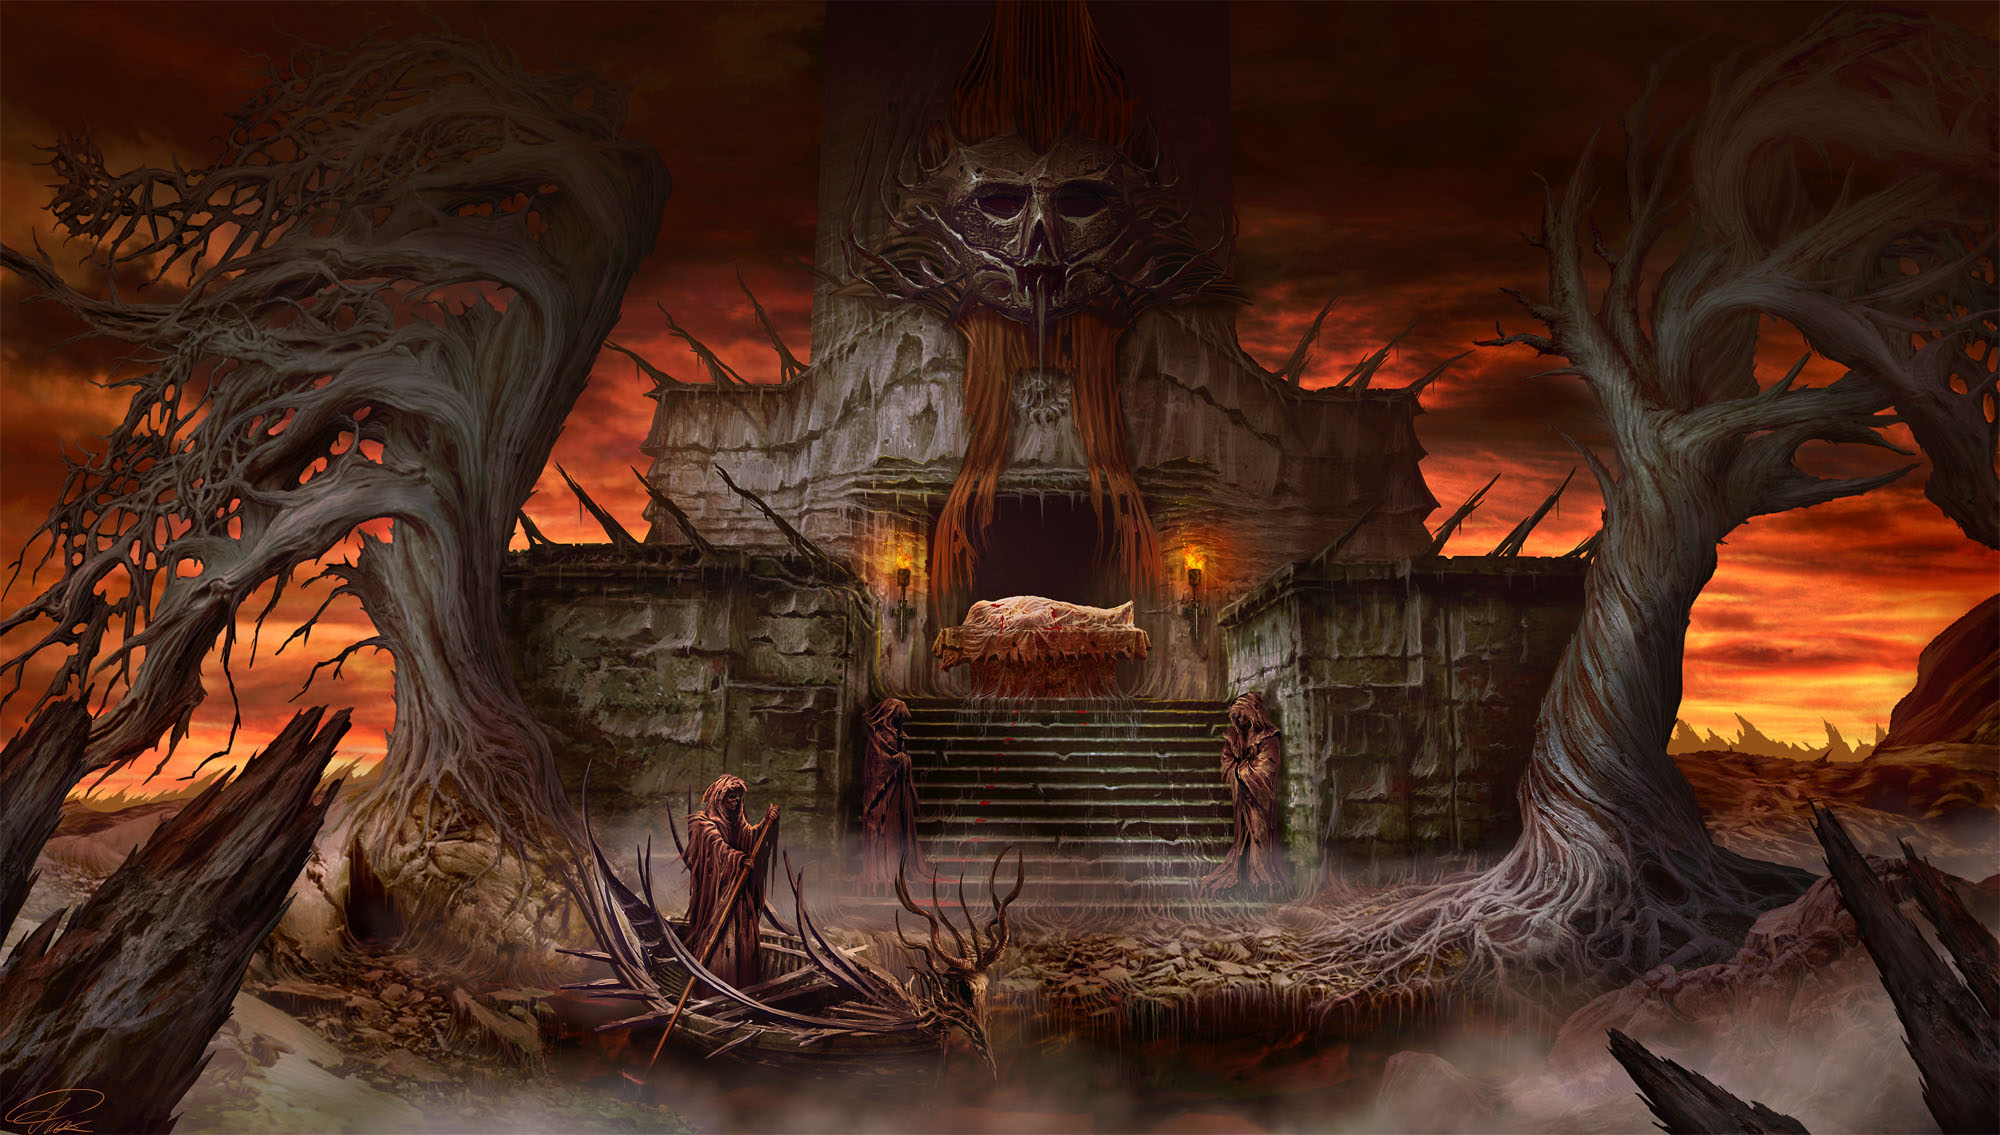 Digital Art Fantasy Art Grim Reaper Video Games Tormentum Dark Sorrow Trees Mist Boat Temple Altar S 2000x1135